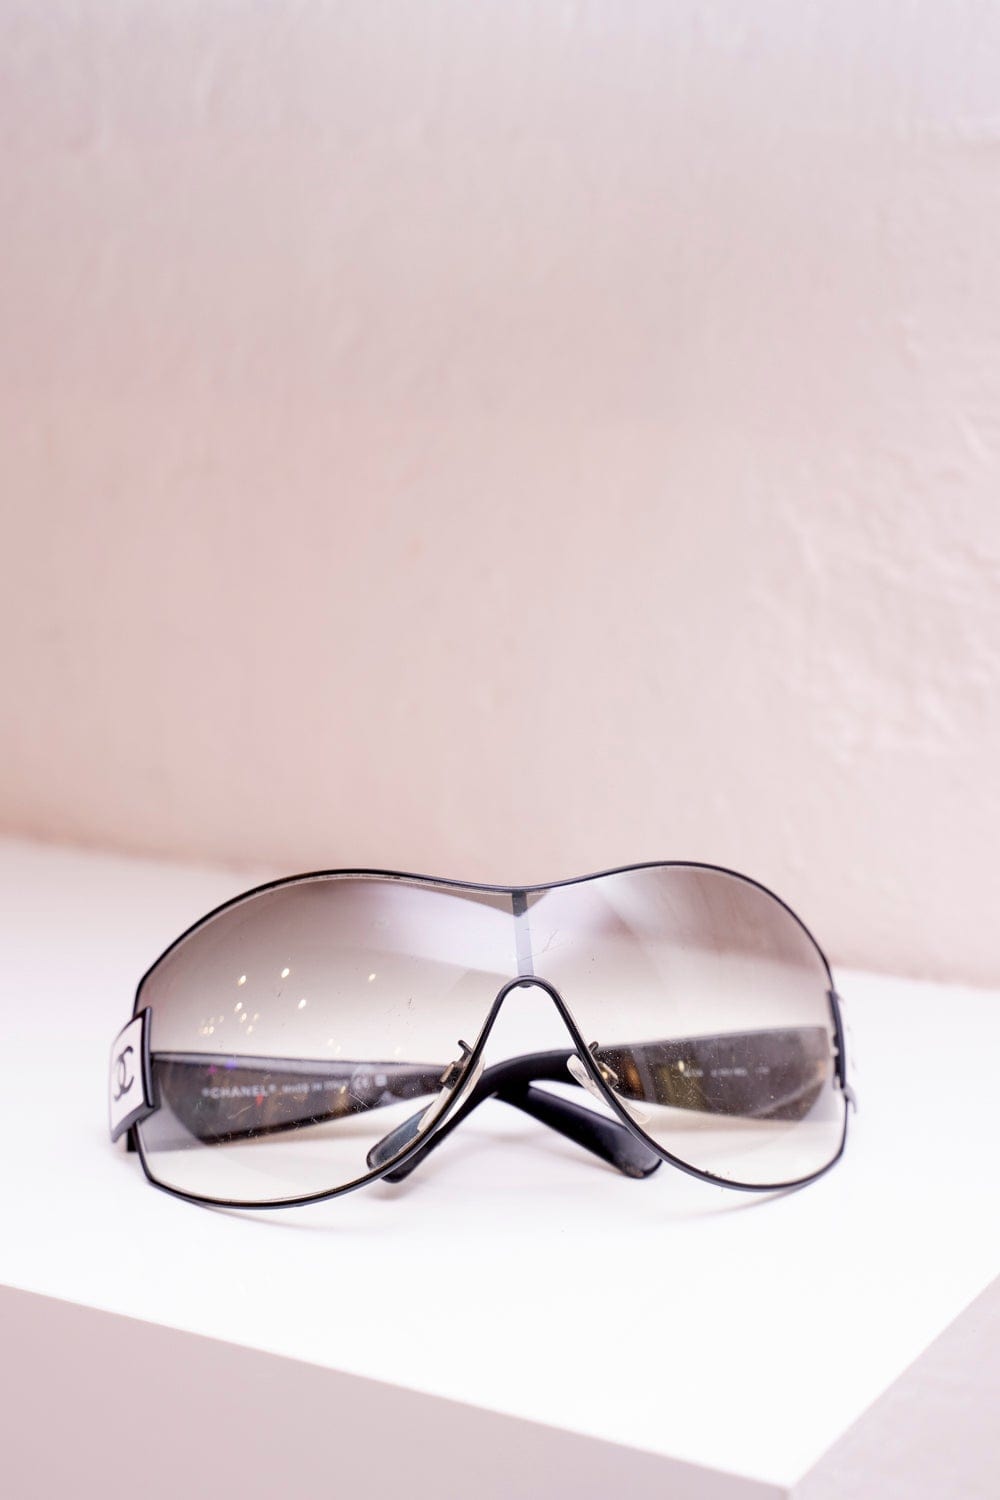 Futuristic Narrow Cyclops Visor Sunglasses – Mercantile Miner